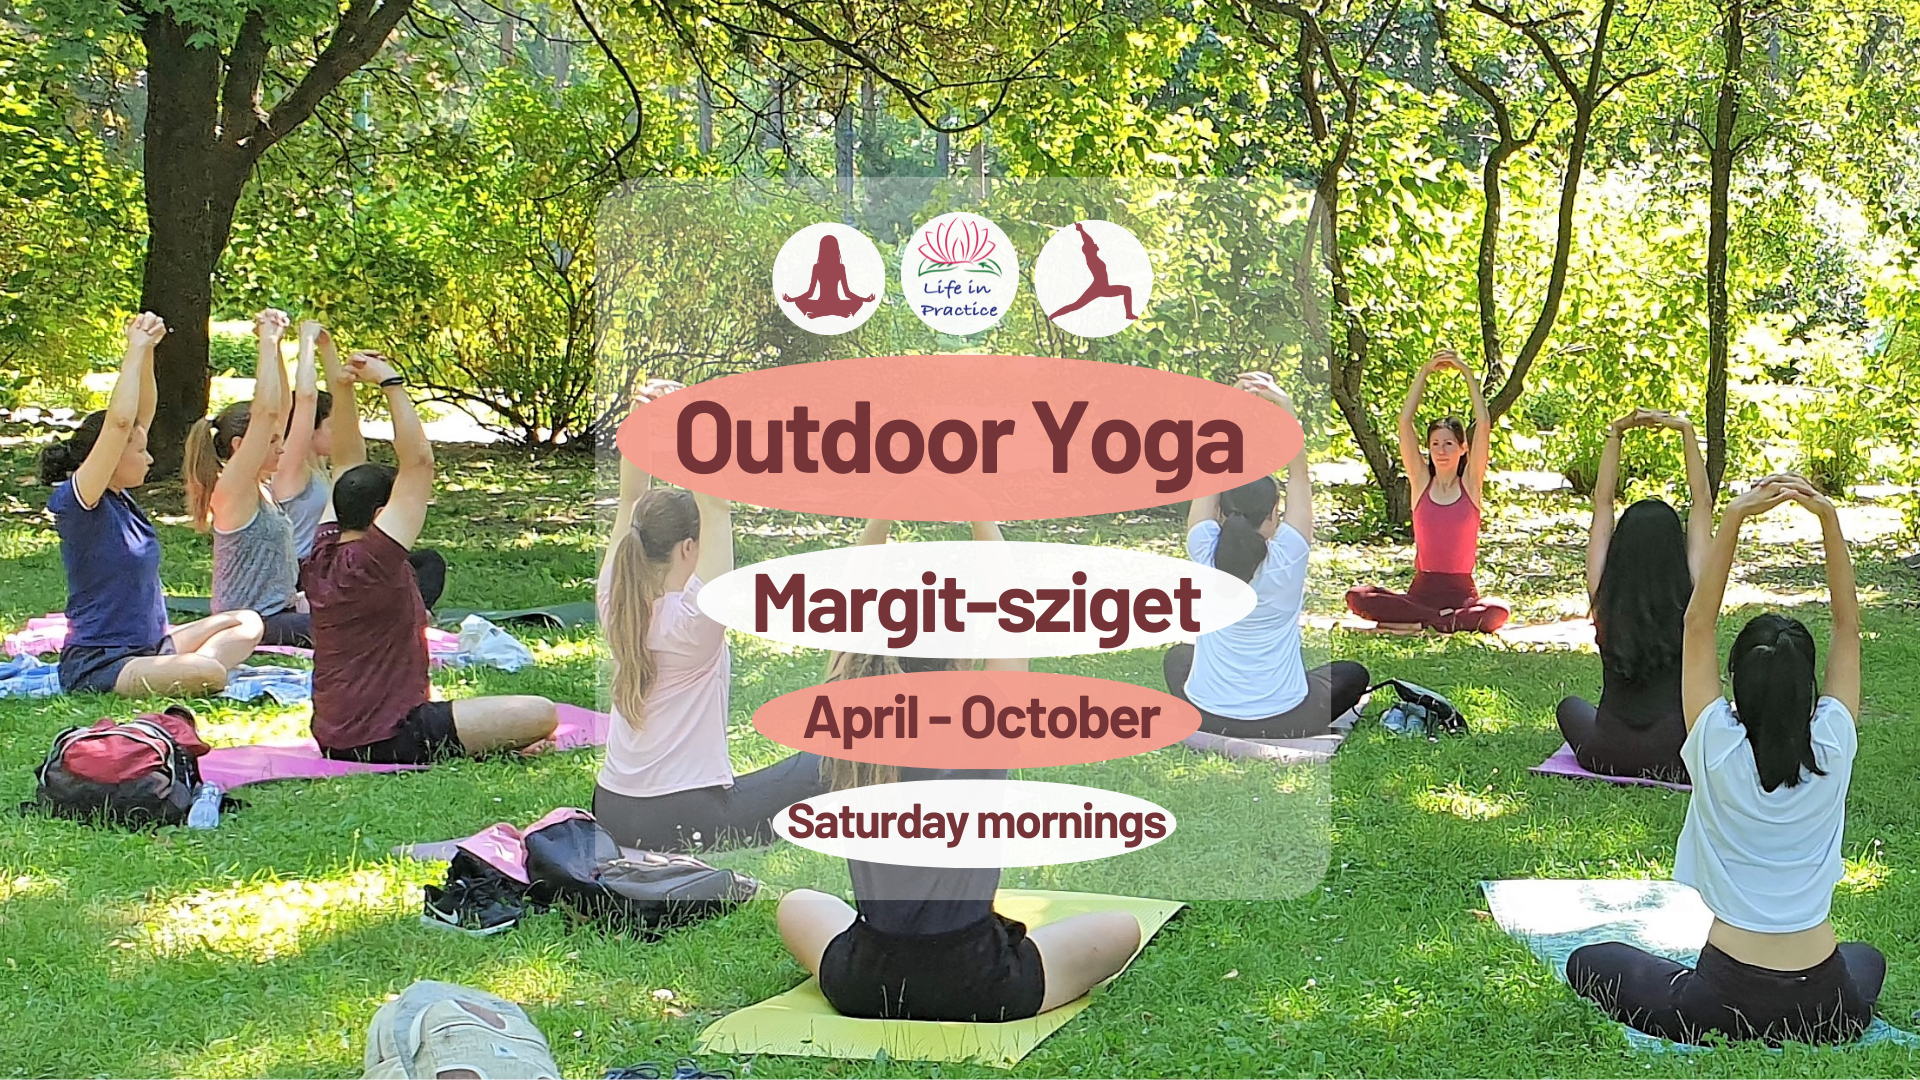 Outdoor Hatha Yoga with Meditation, Event